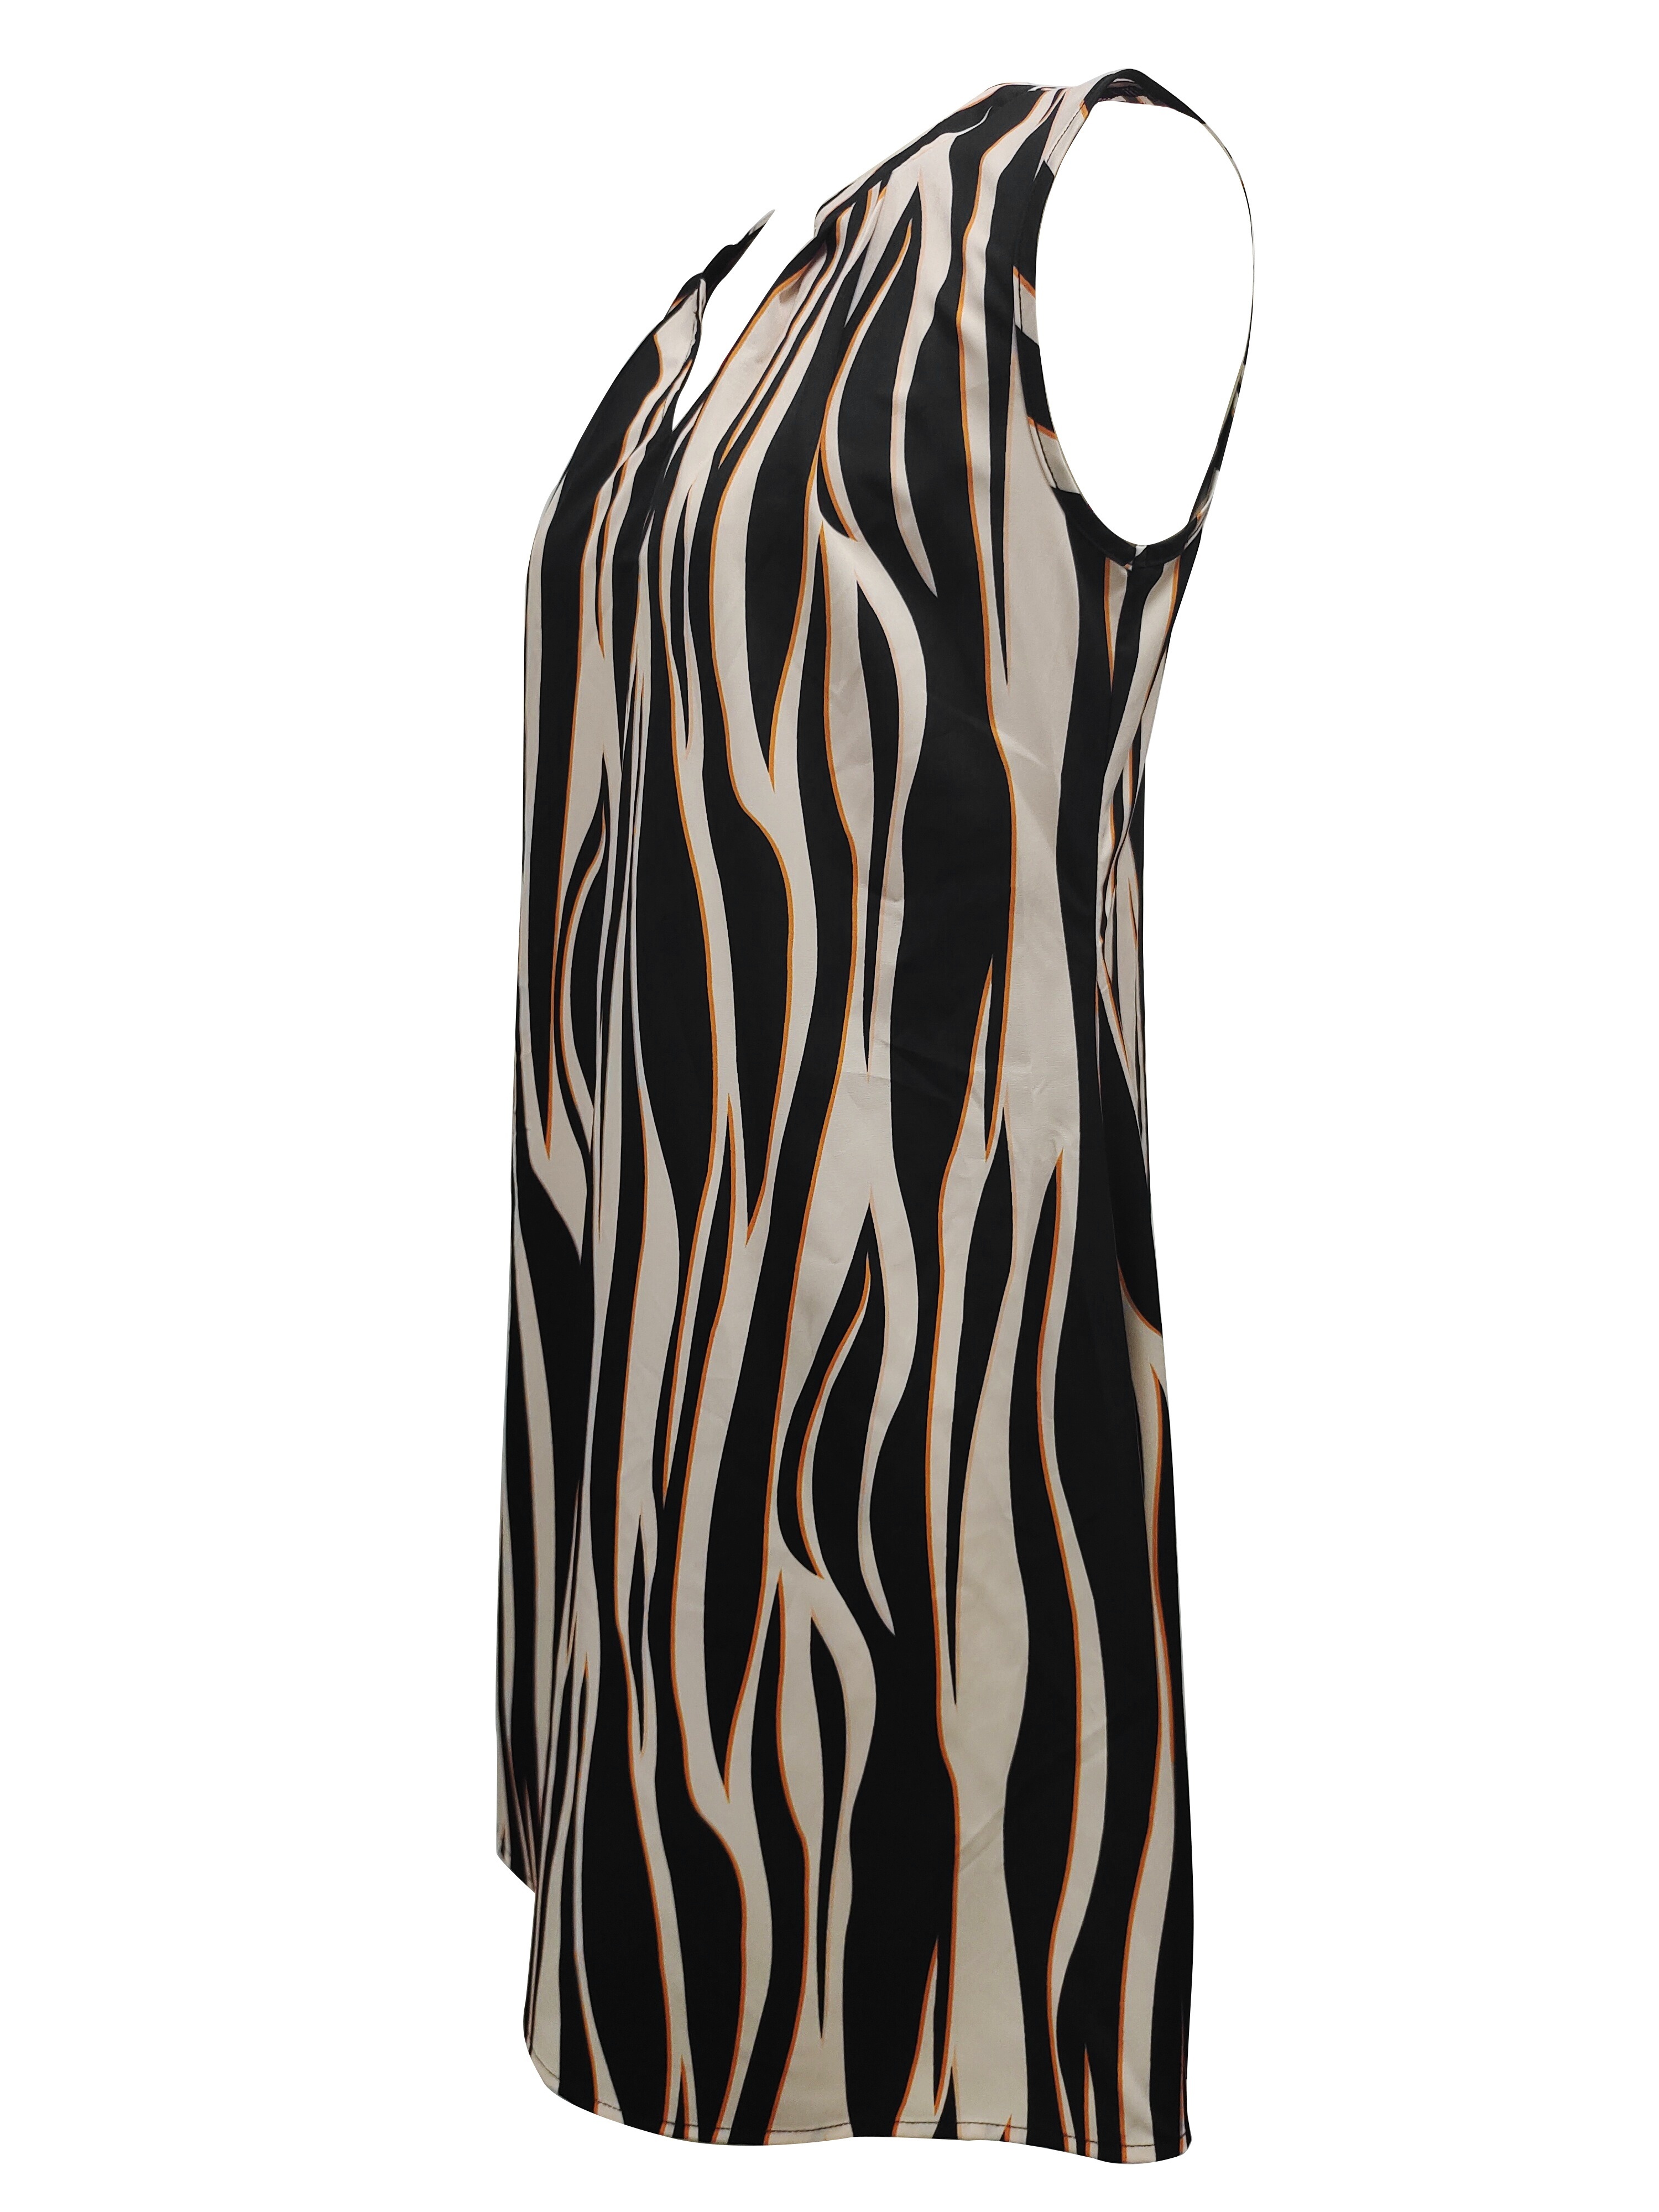 abstract ripple print dress casual v neck sleeveless dress womens clothing details 38